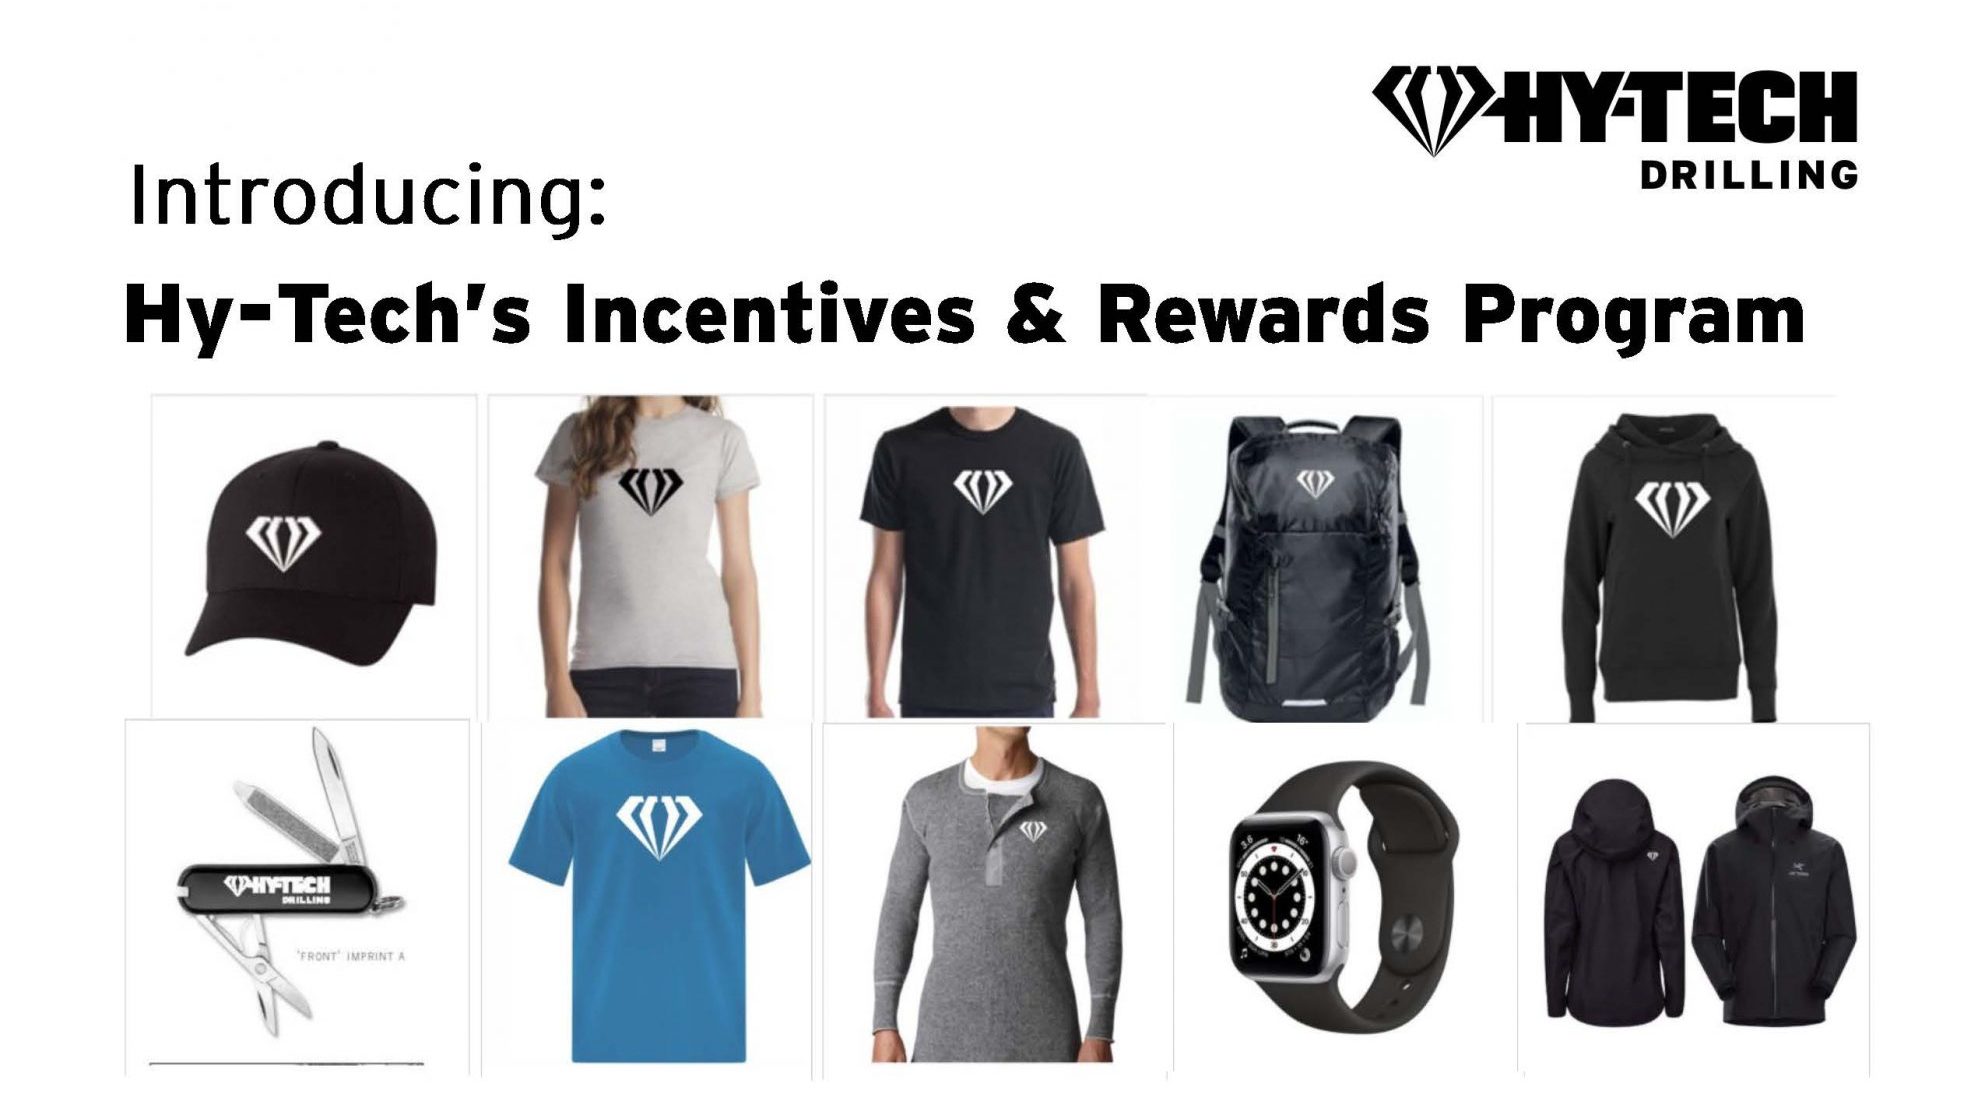 Introducing: Hy-Tech’s Incentive & Rewards Program